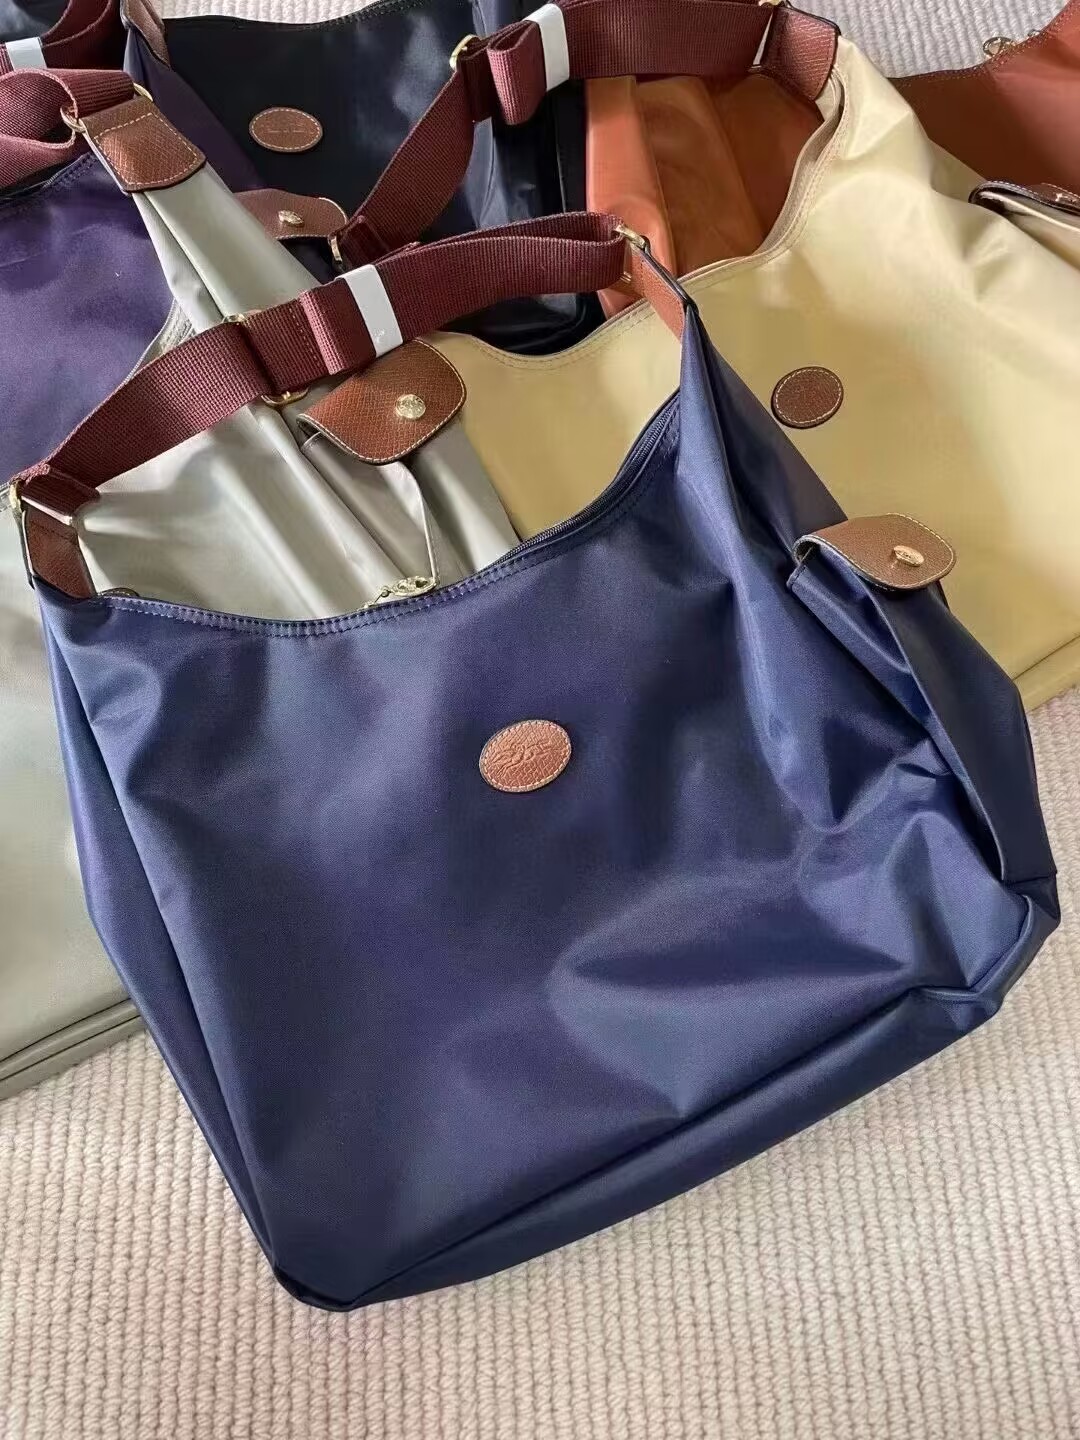 100% original longchamp le pliage hobo bag waterproof nylon messenger bag  shopping bag shoulder bag Casual women bag blueberry color